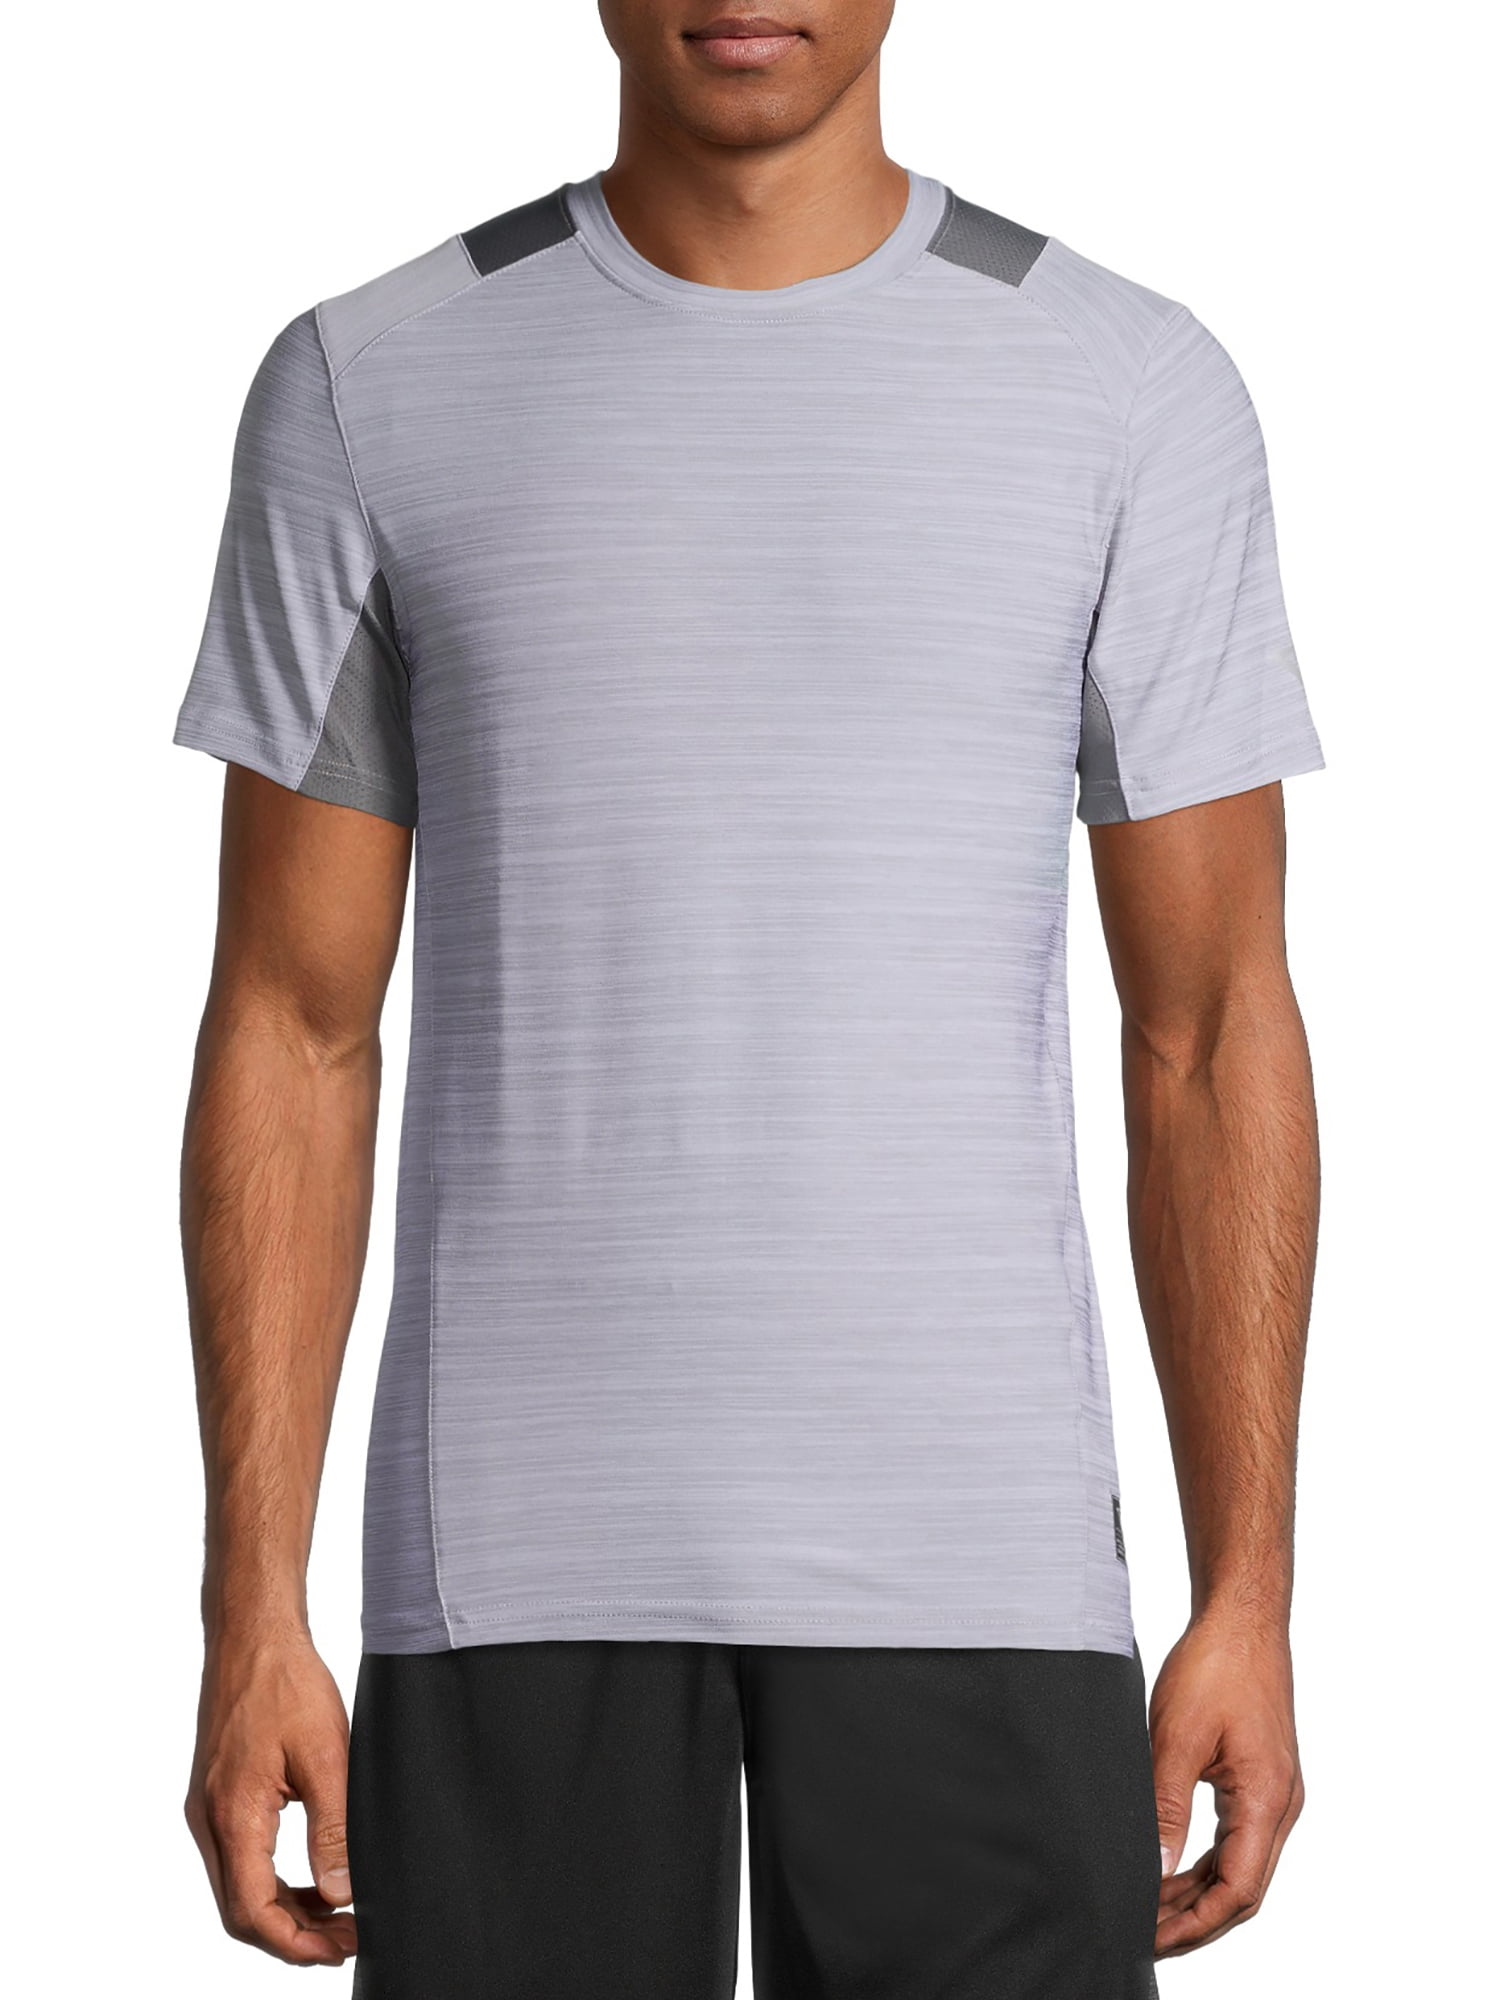 Cheetah Men's Striker Crewneck Athletic T-Shirt - Walmart.com